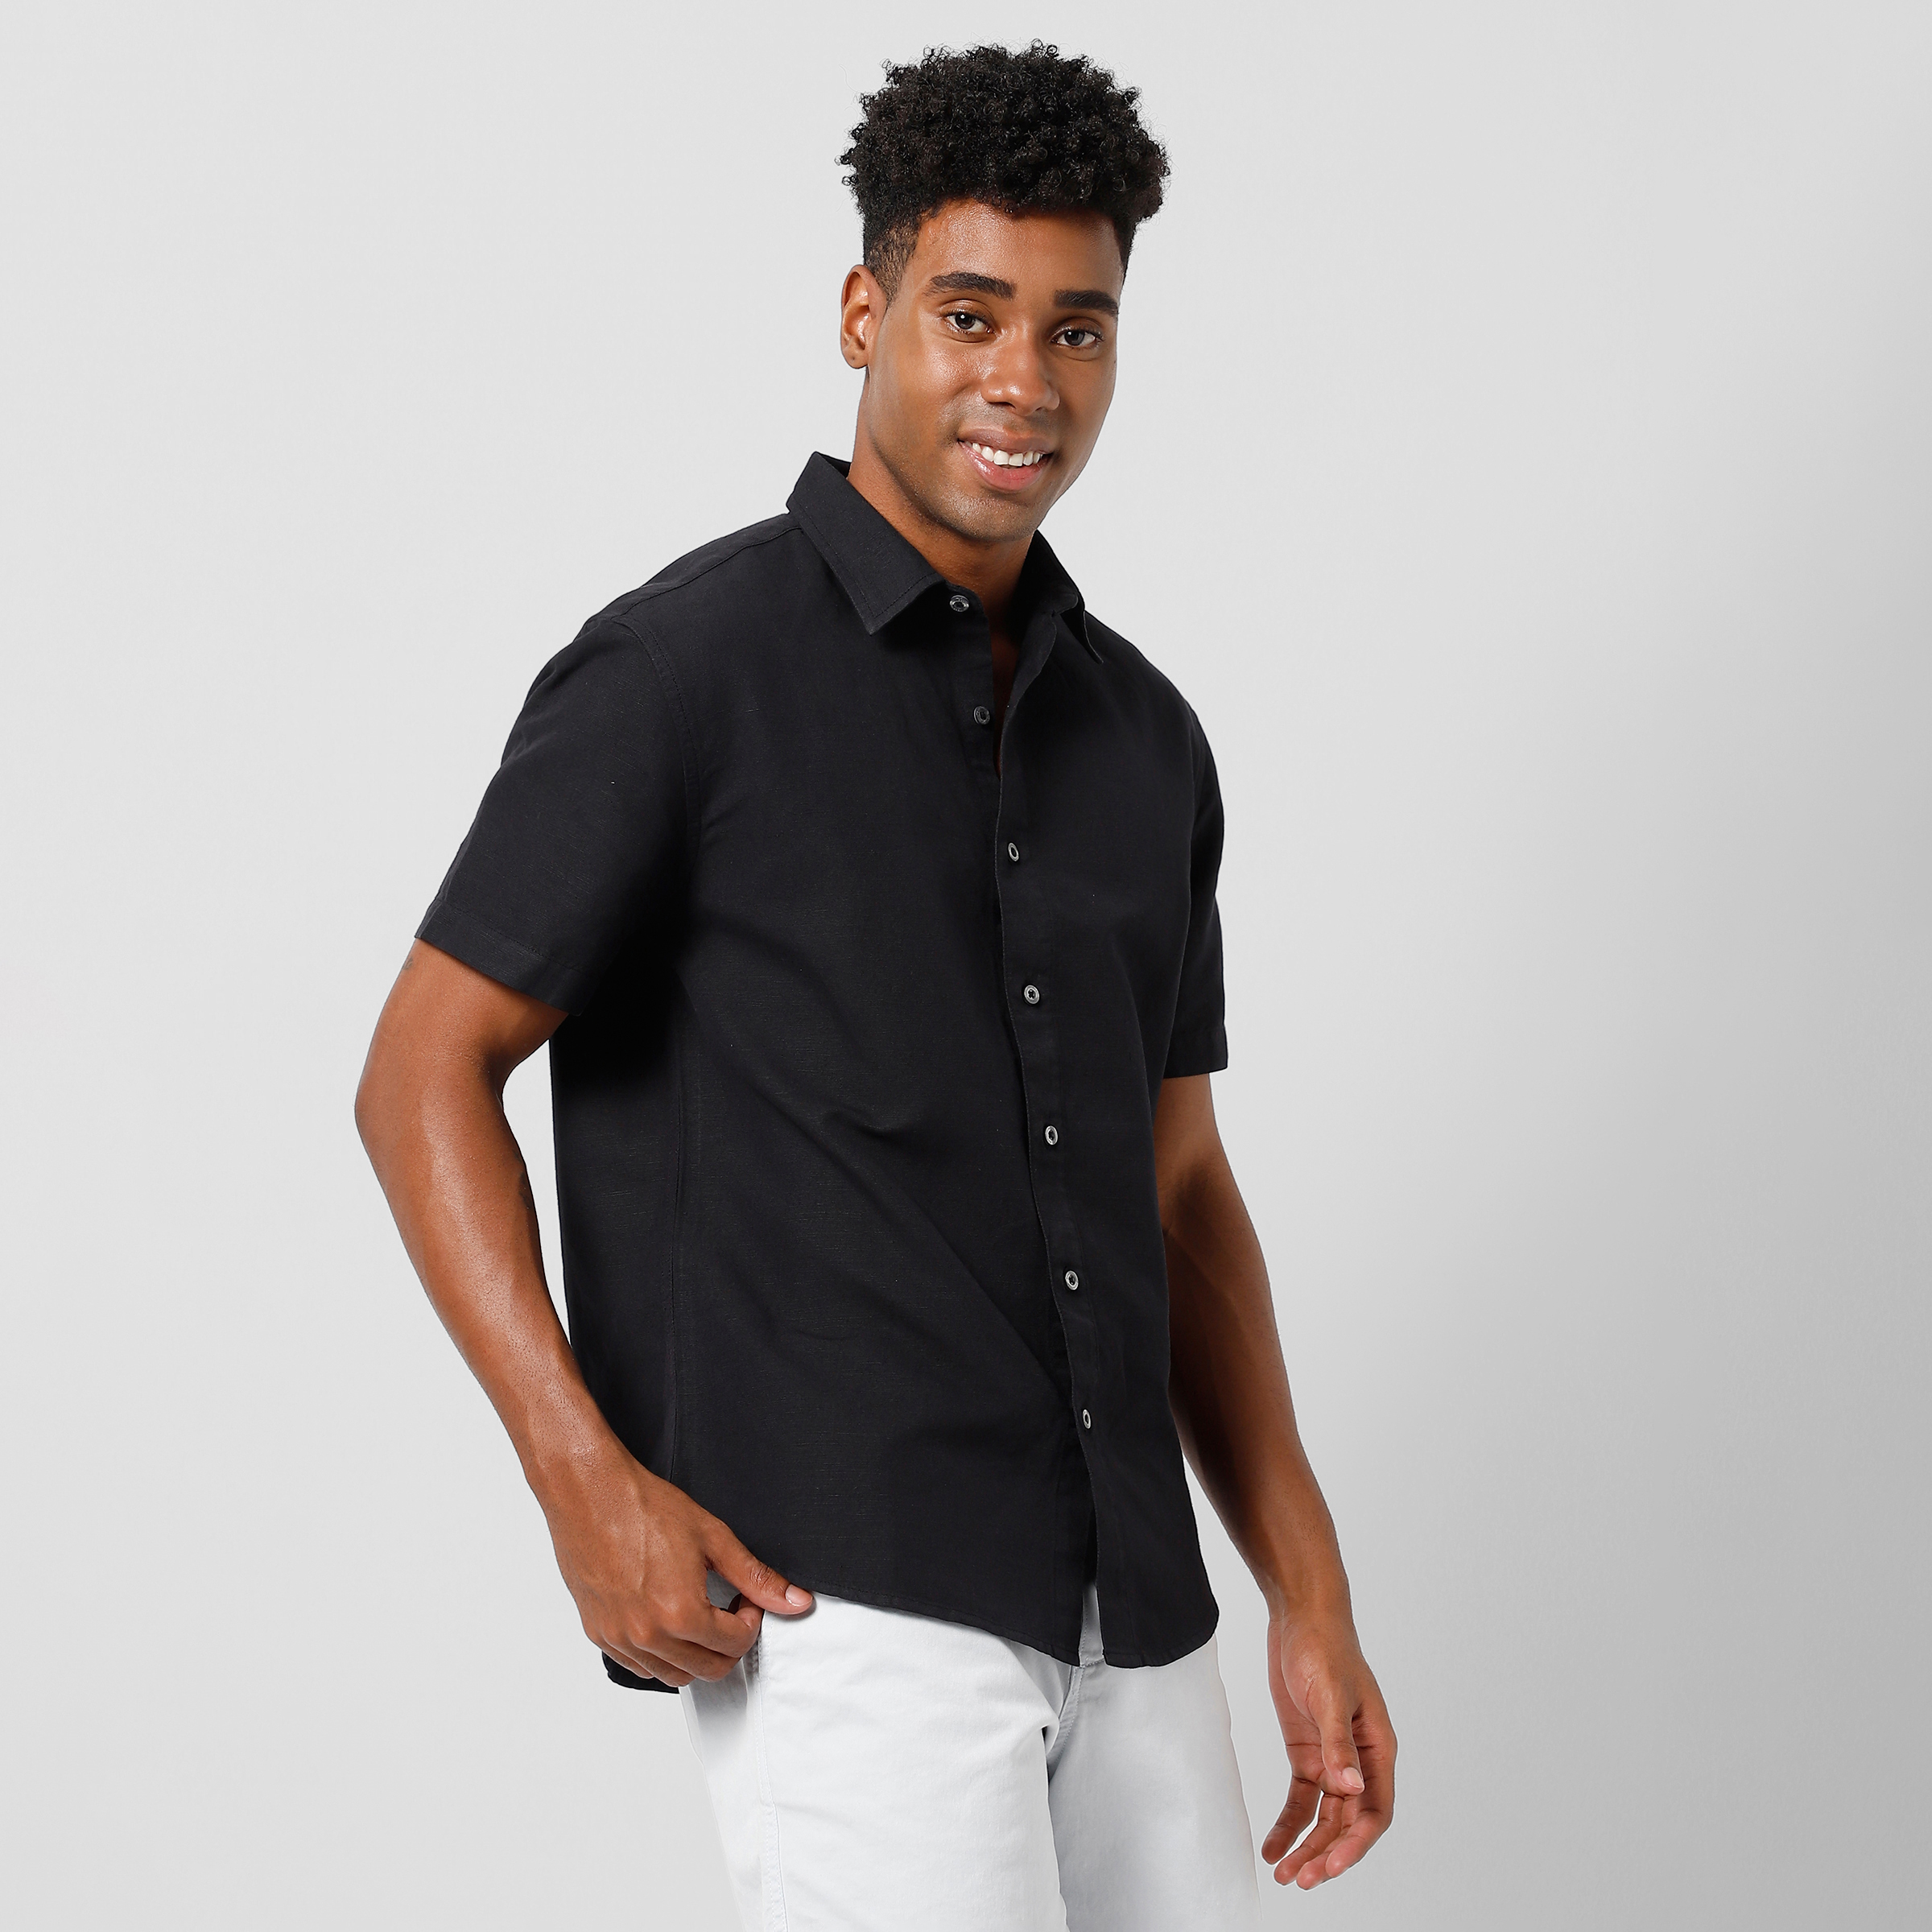 Retreat Linen Shirt Black side on model